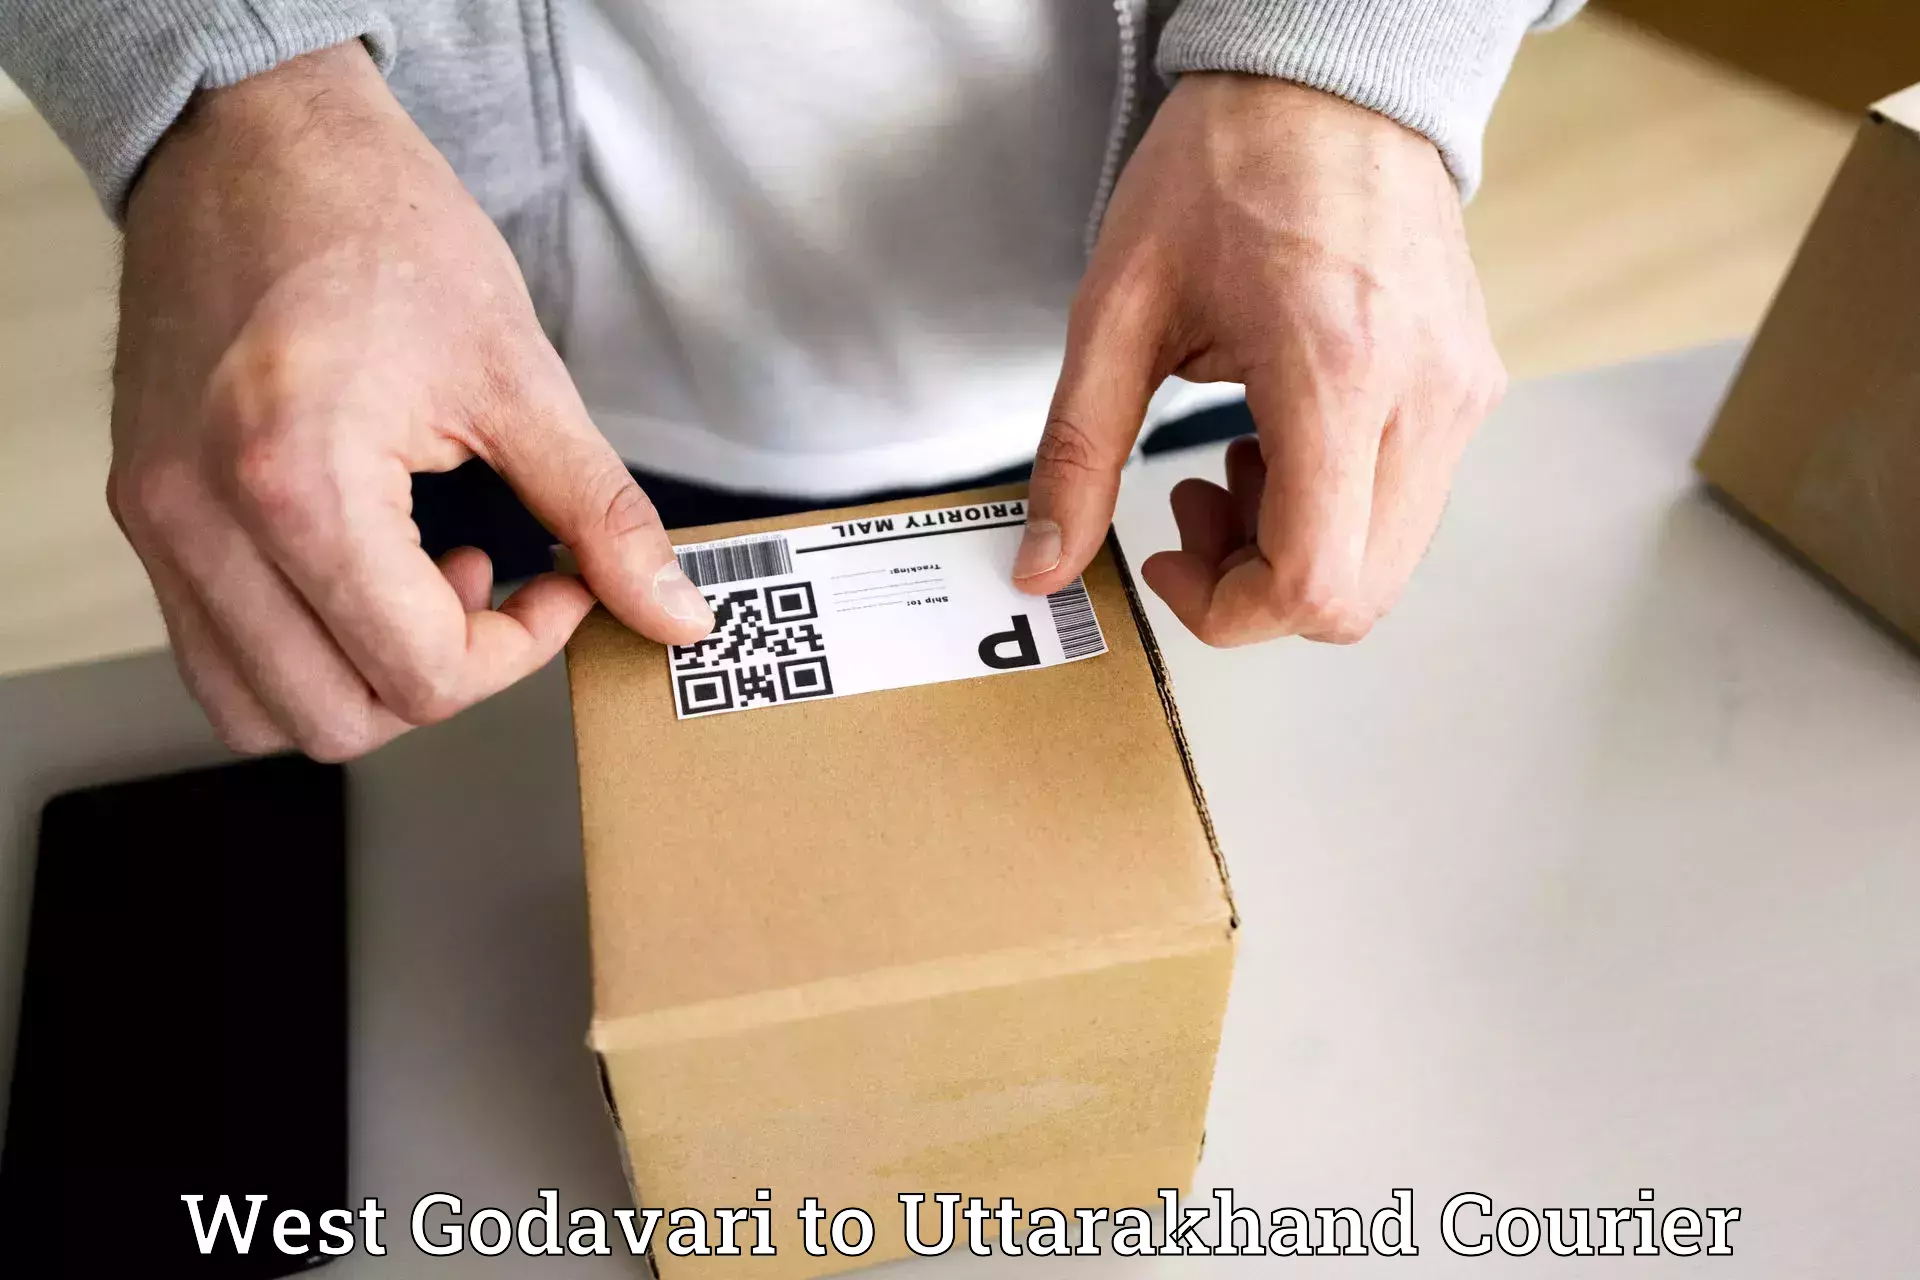 Nationwide delivery network West Godavari to Dehradun